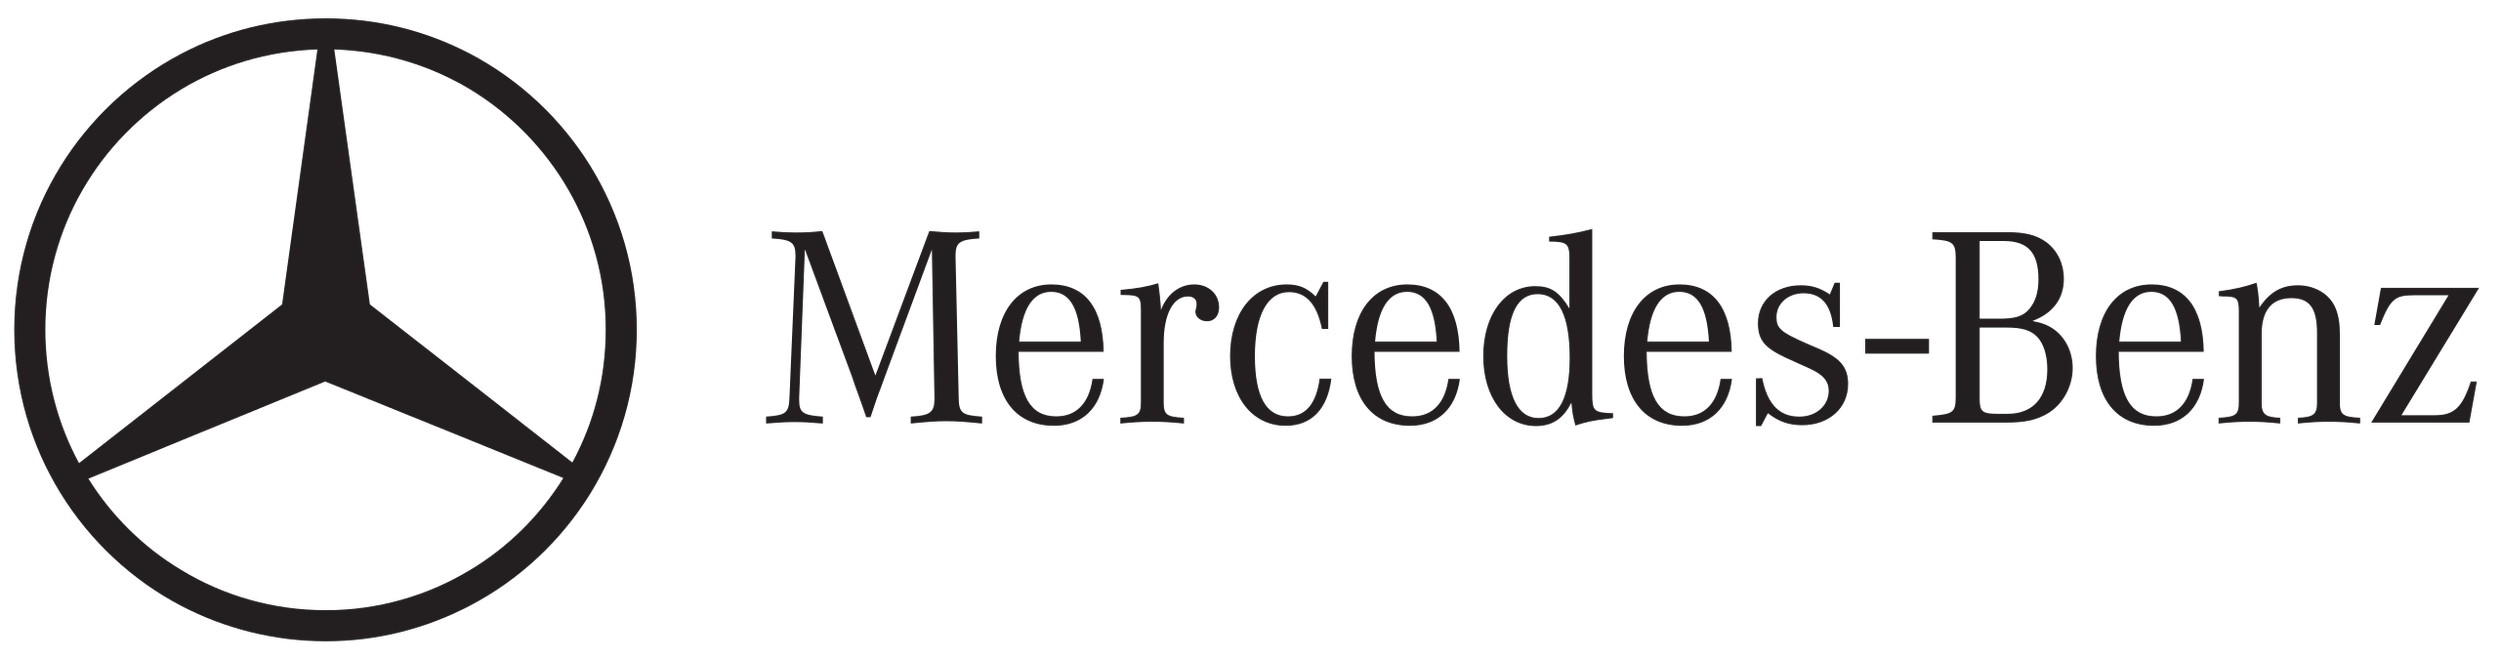 Mercedes-Benz_logo.svg.png